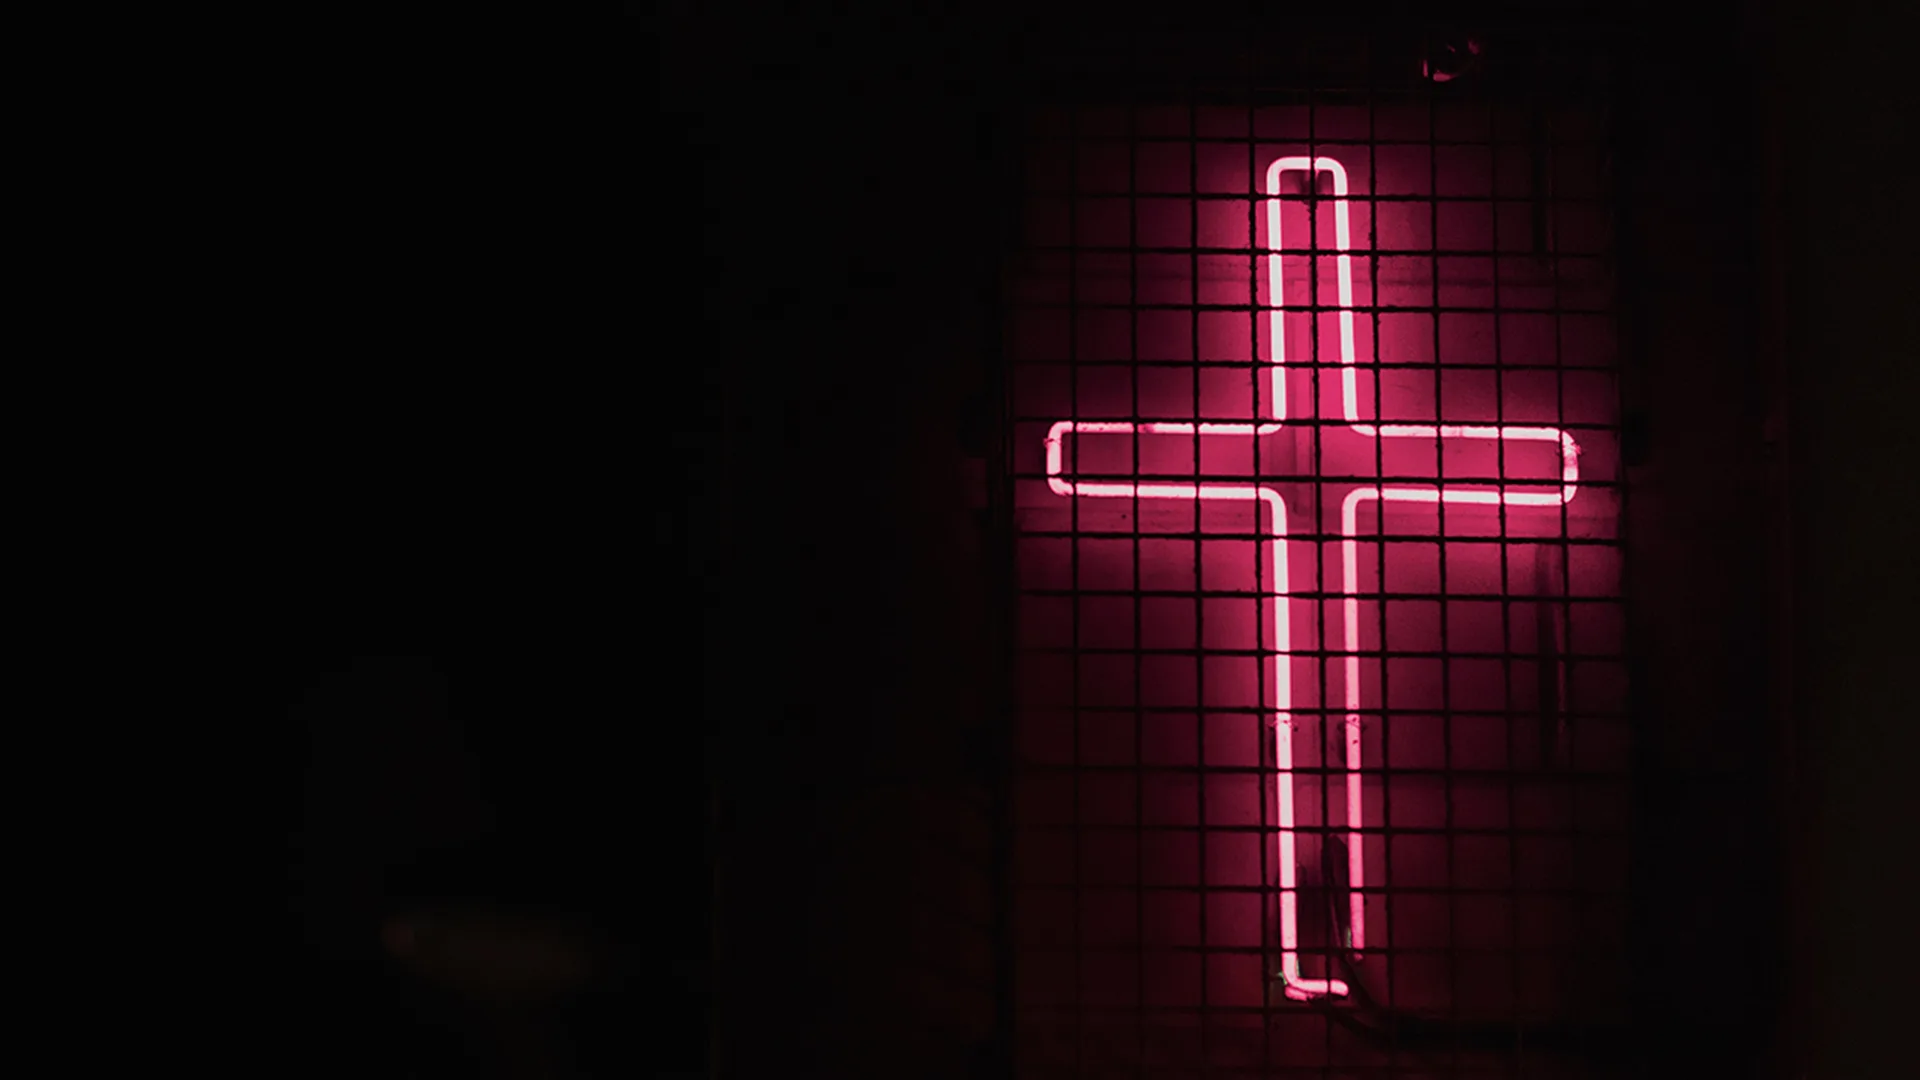 A pink cross in neon lights